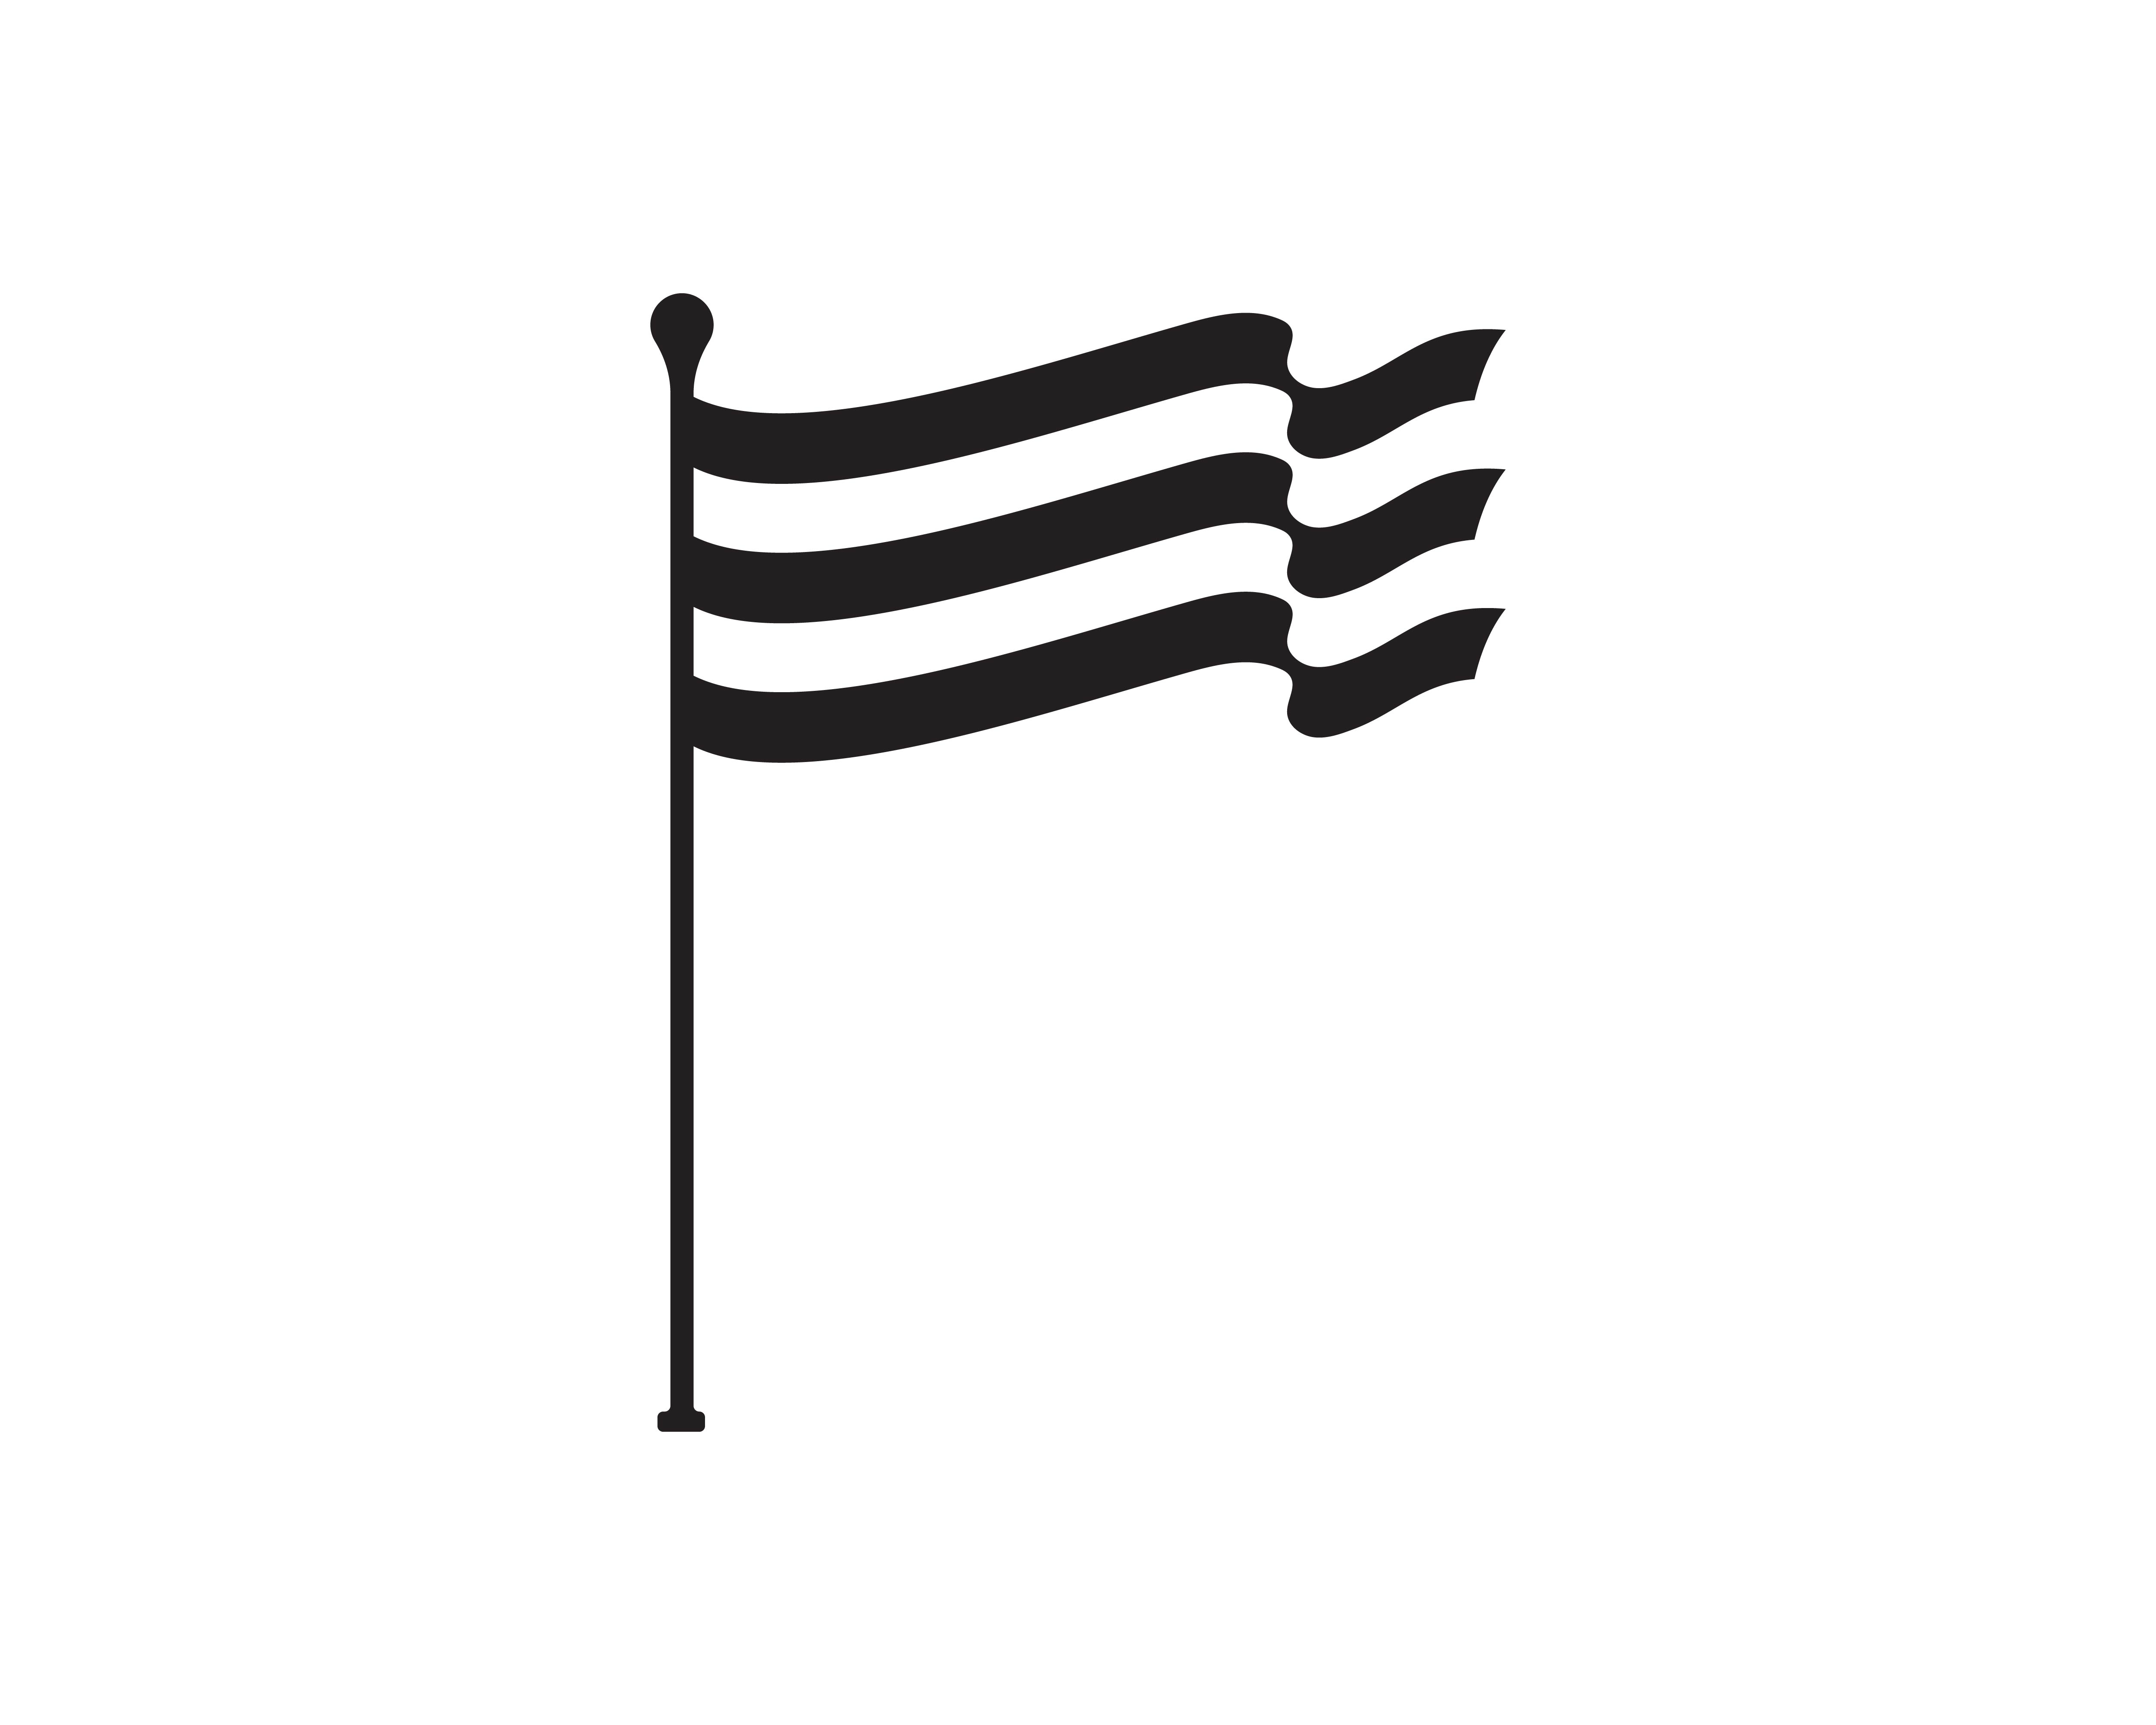 Download flag template logo and symbol vectors - Download Free ...